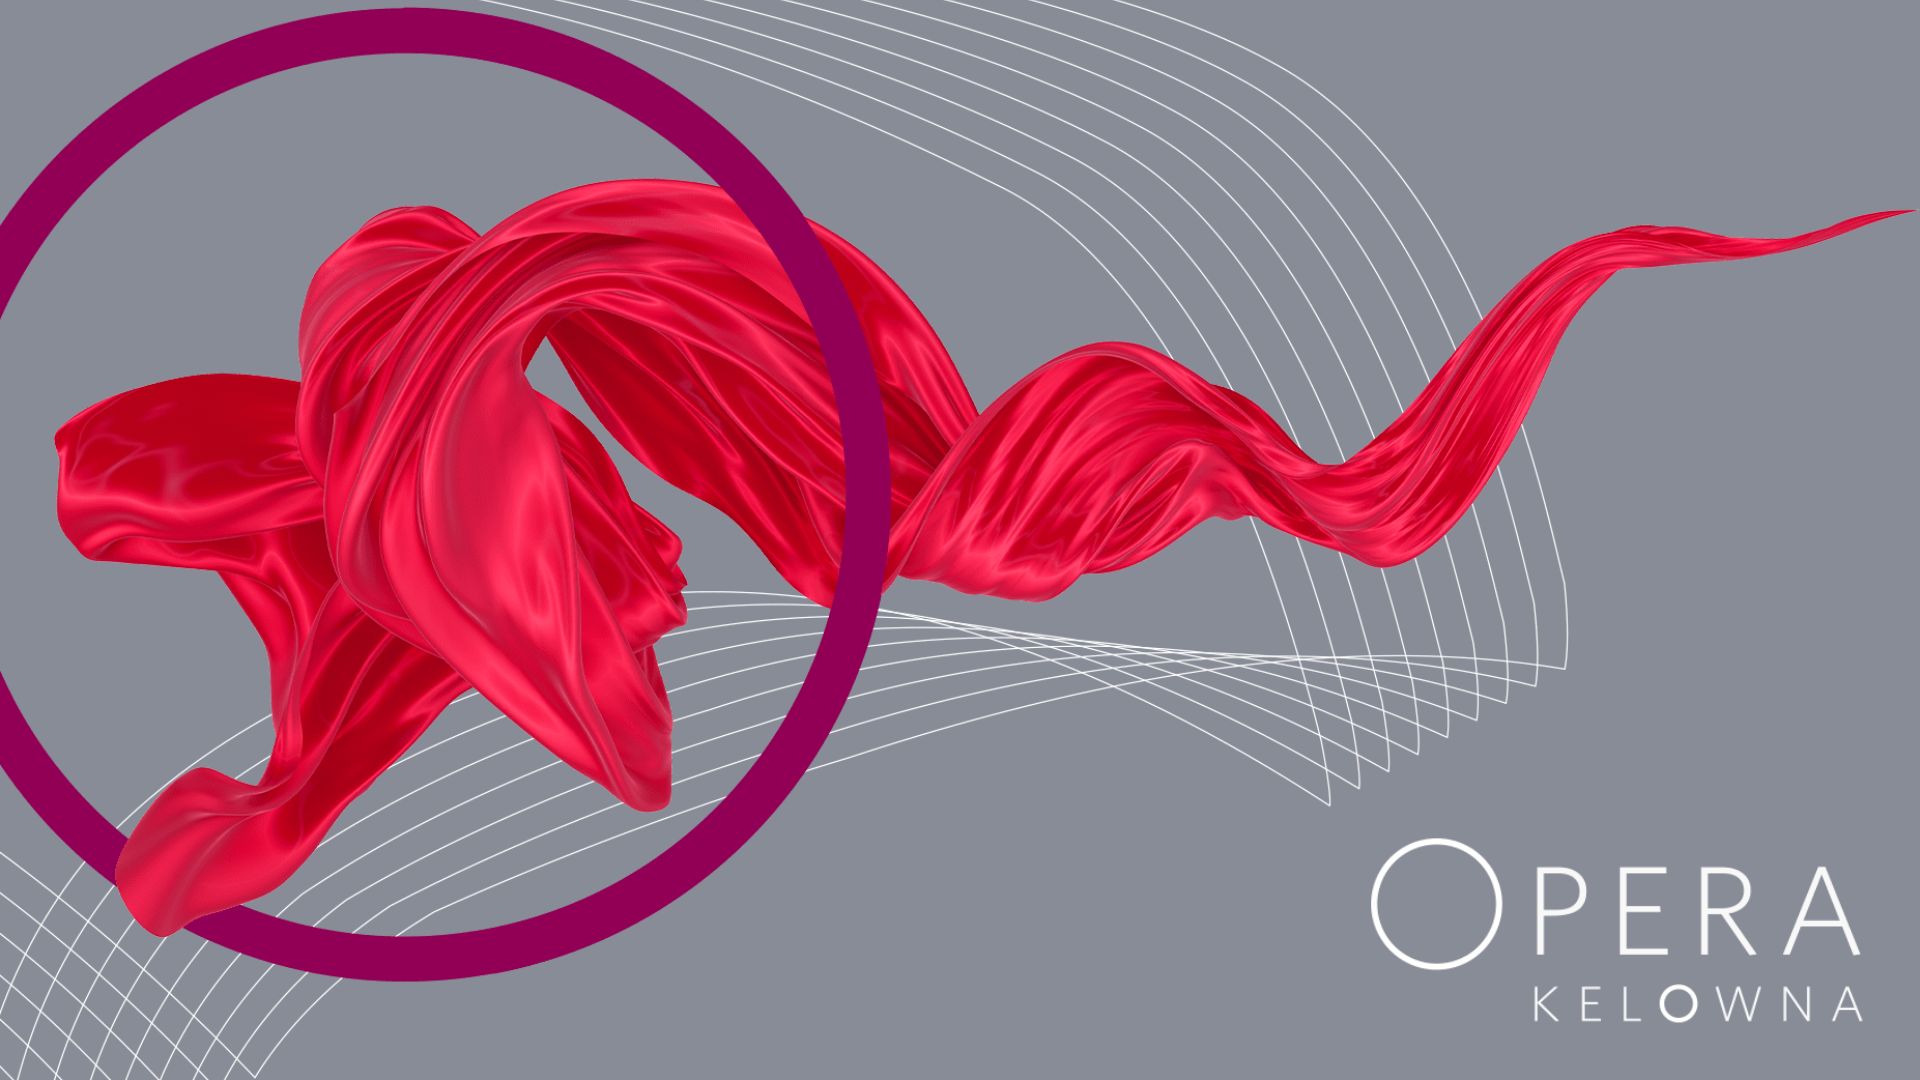 Opera Kelowna logo with flowing red scarf